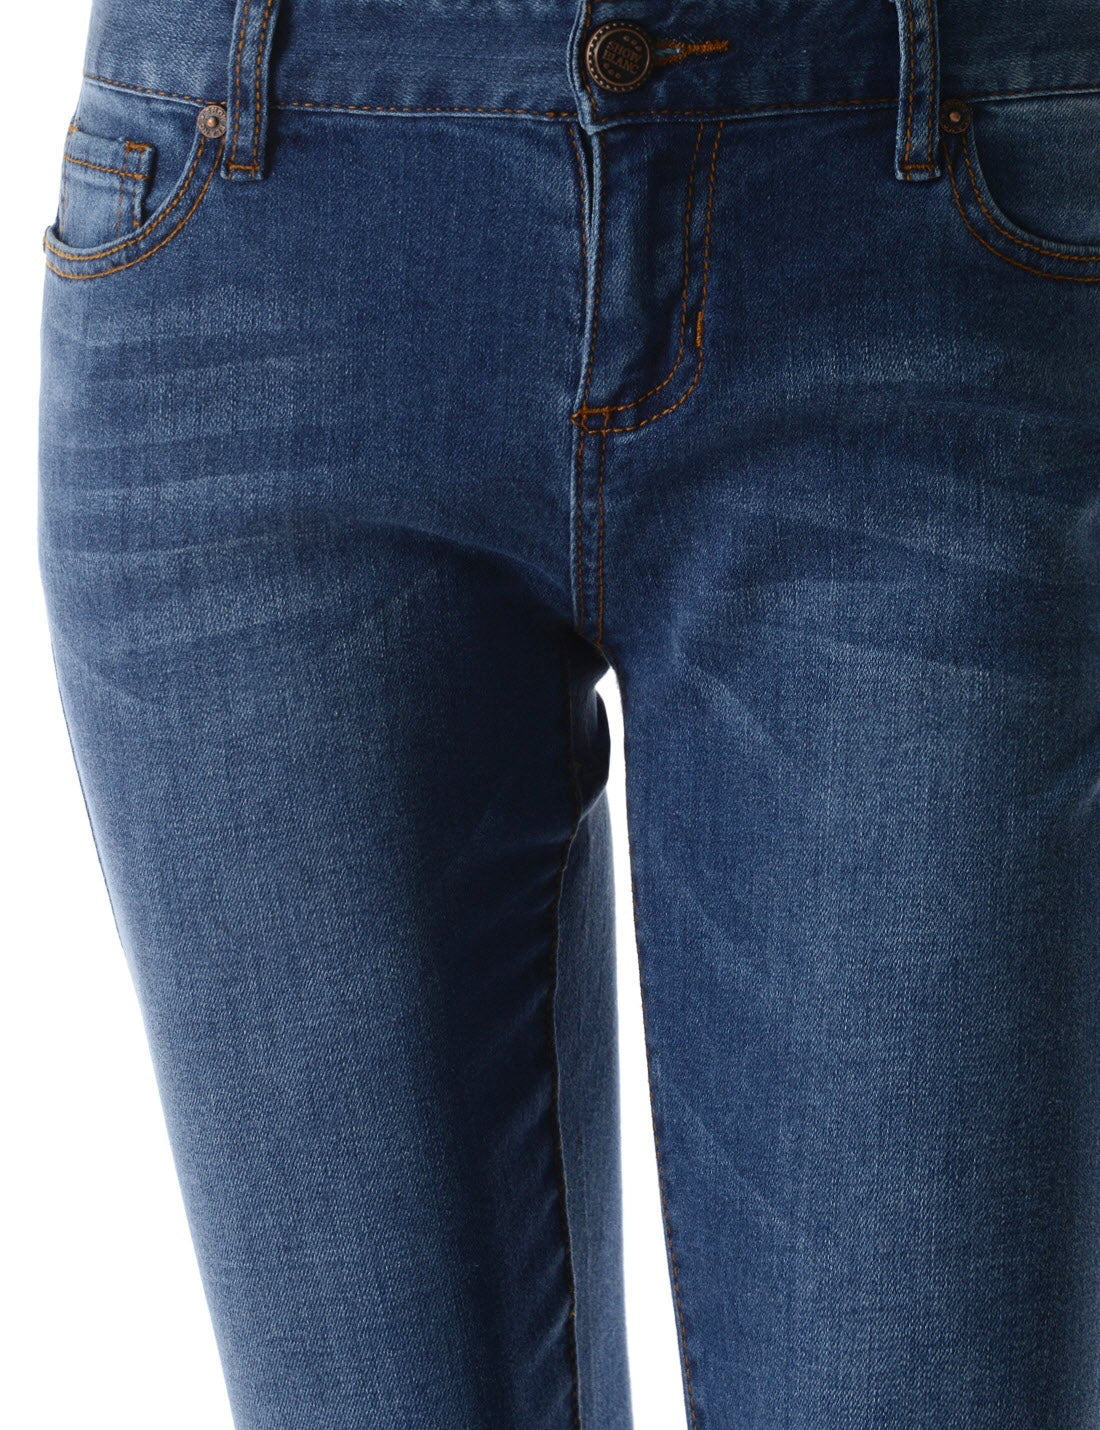 Medium Blue Washed Skinny Jeans Stretch Denim Pants